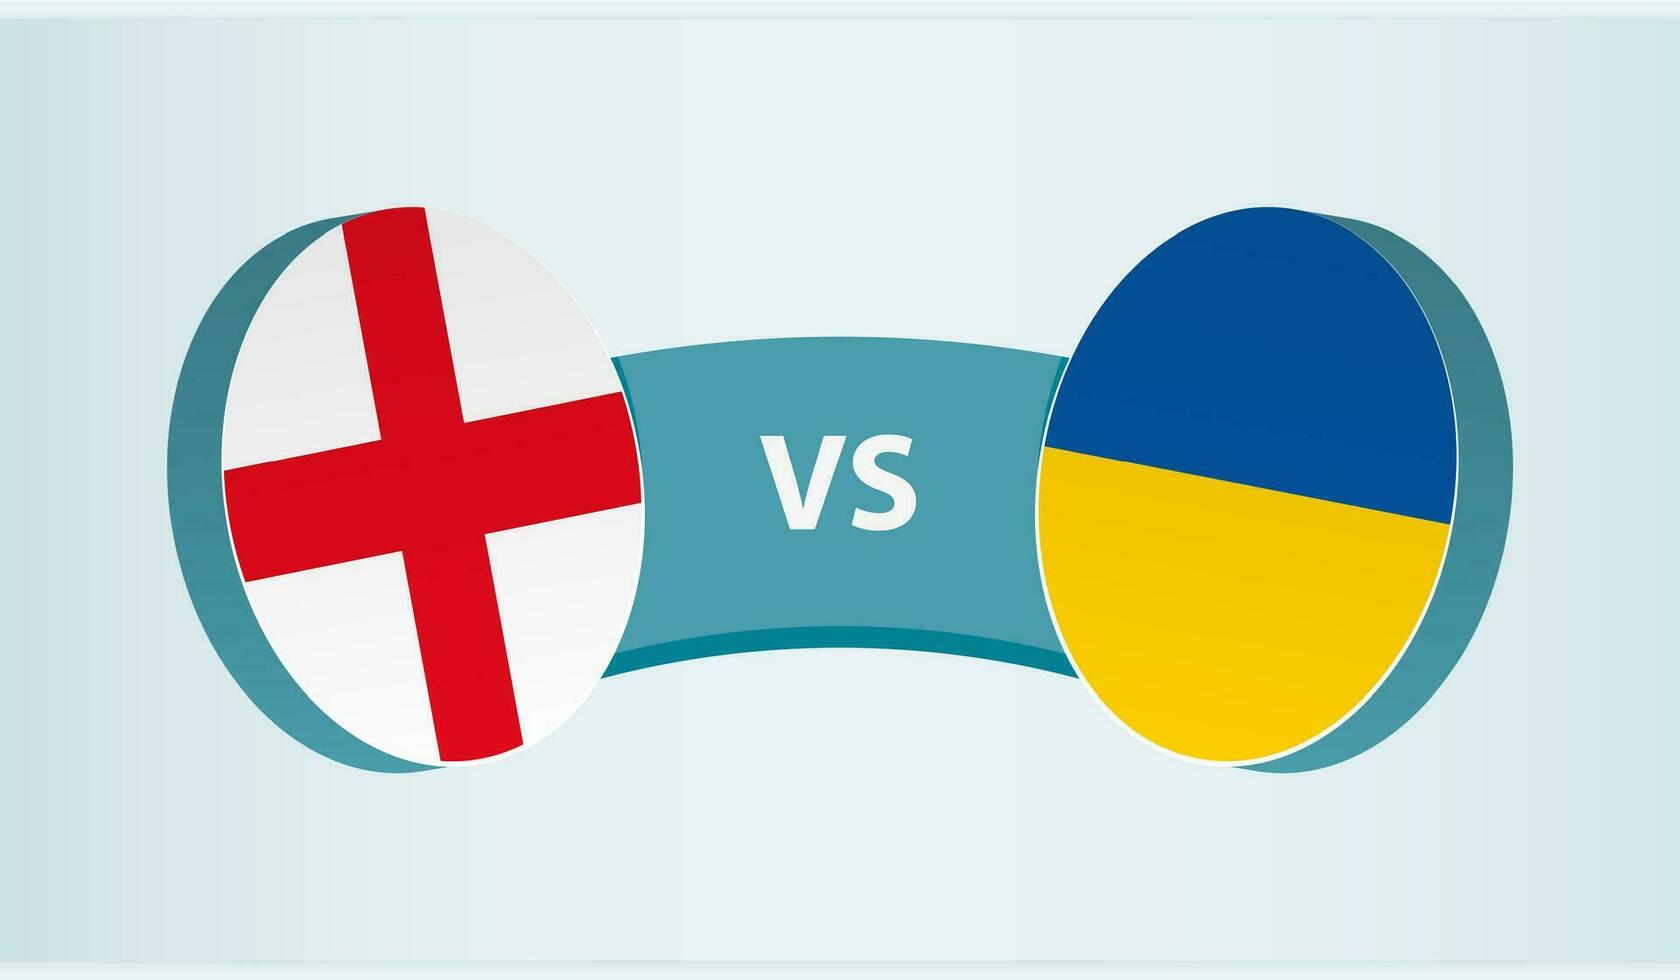 England mot Ukraina, team sporter konkurrens begrepp. vektor